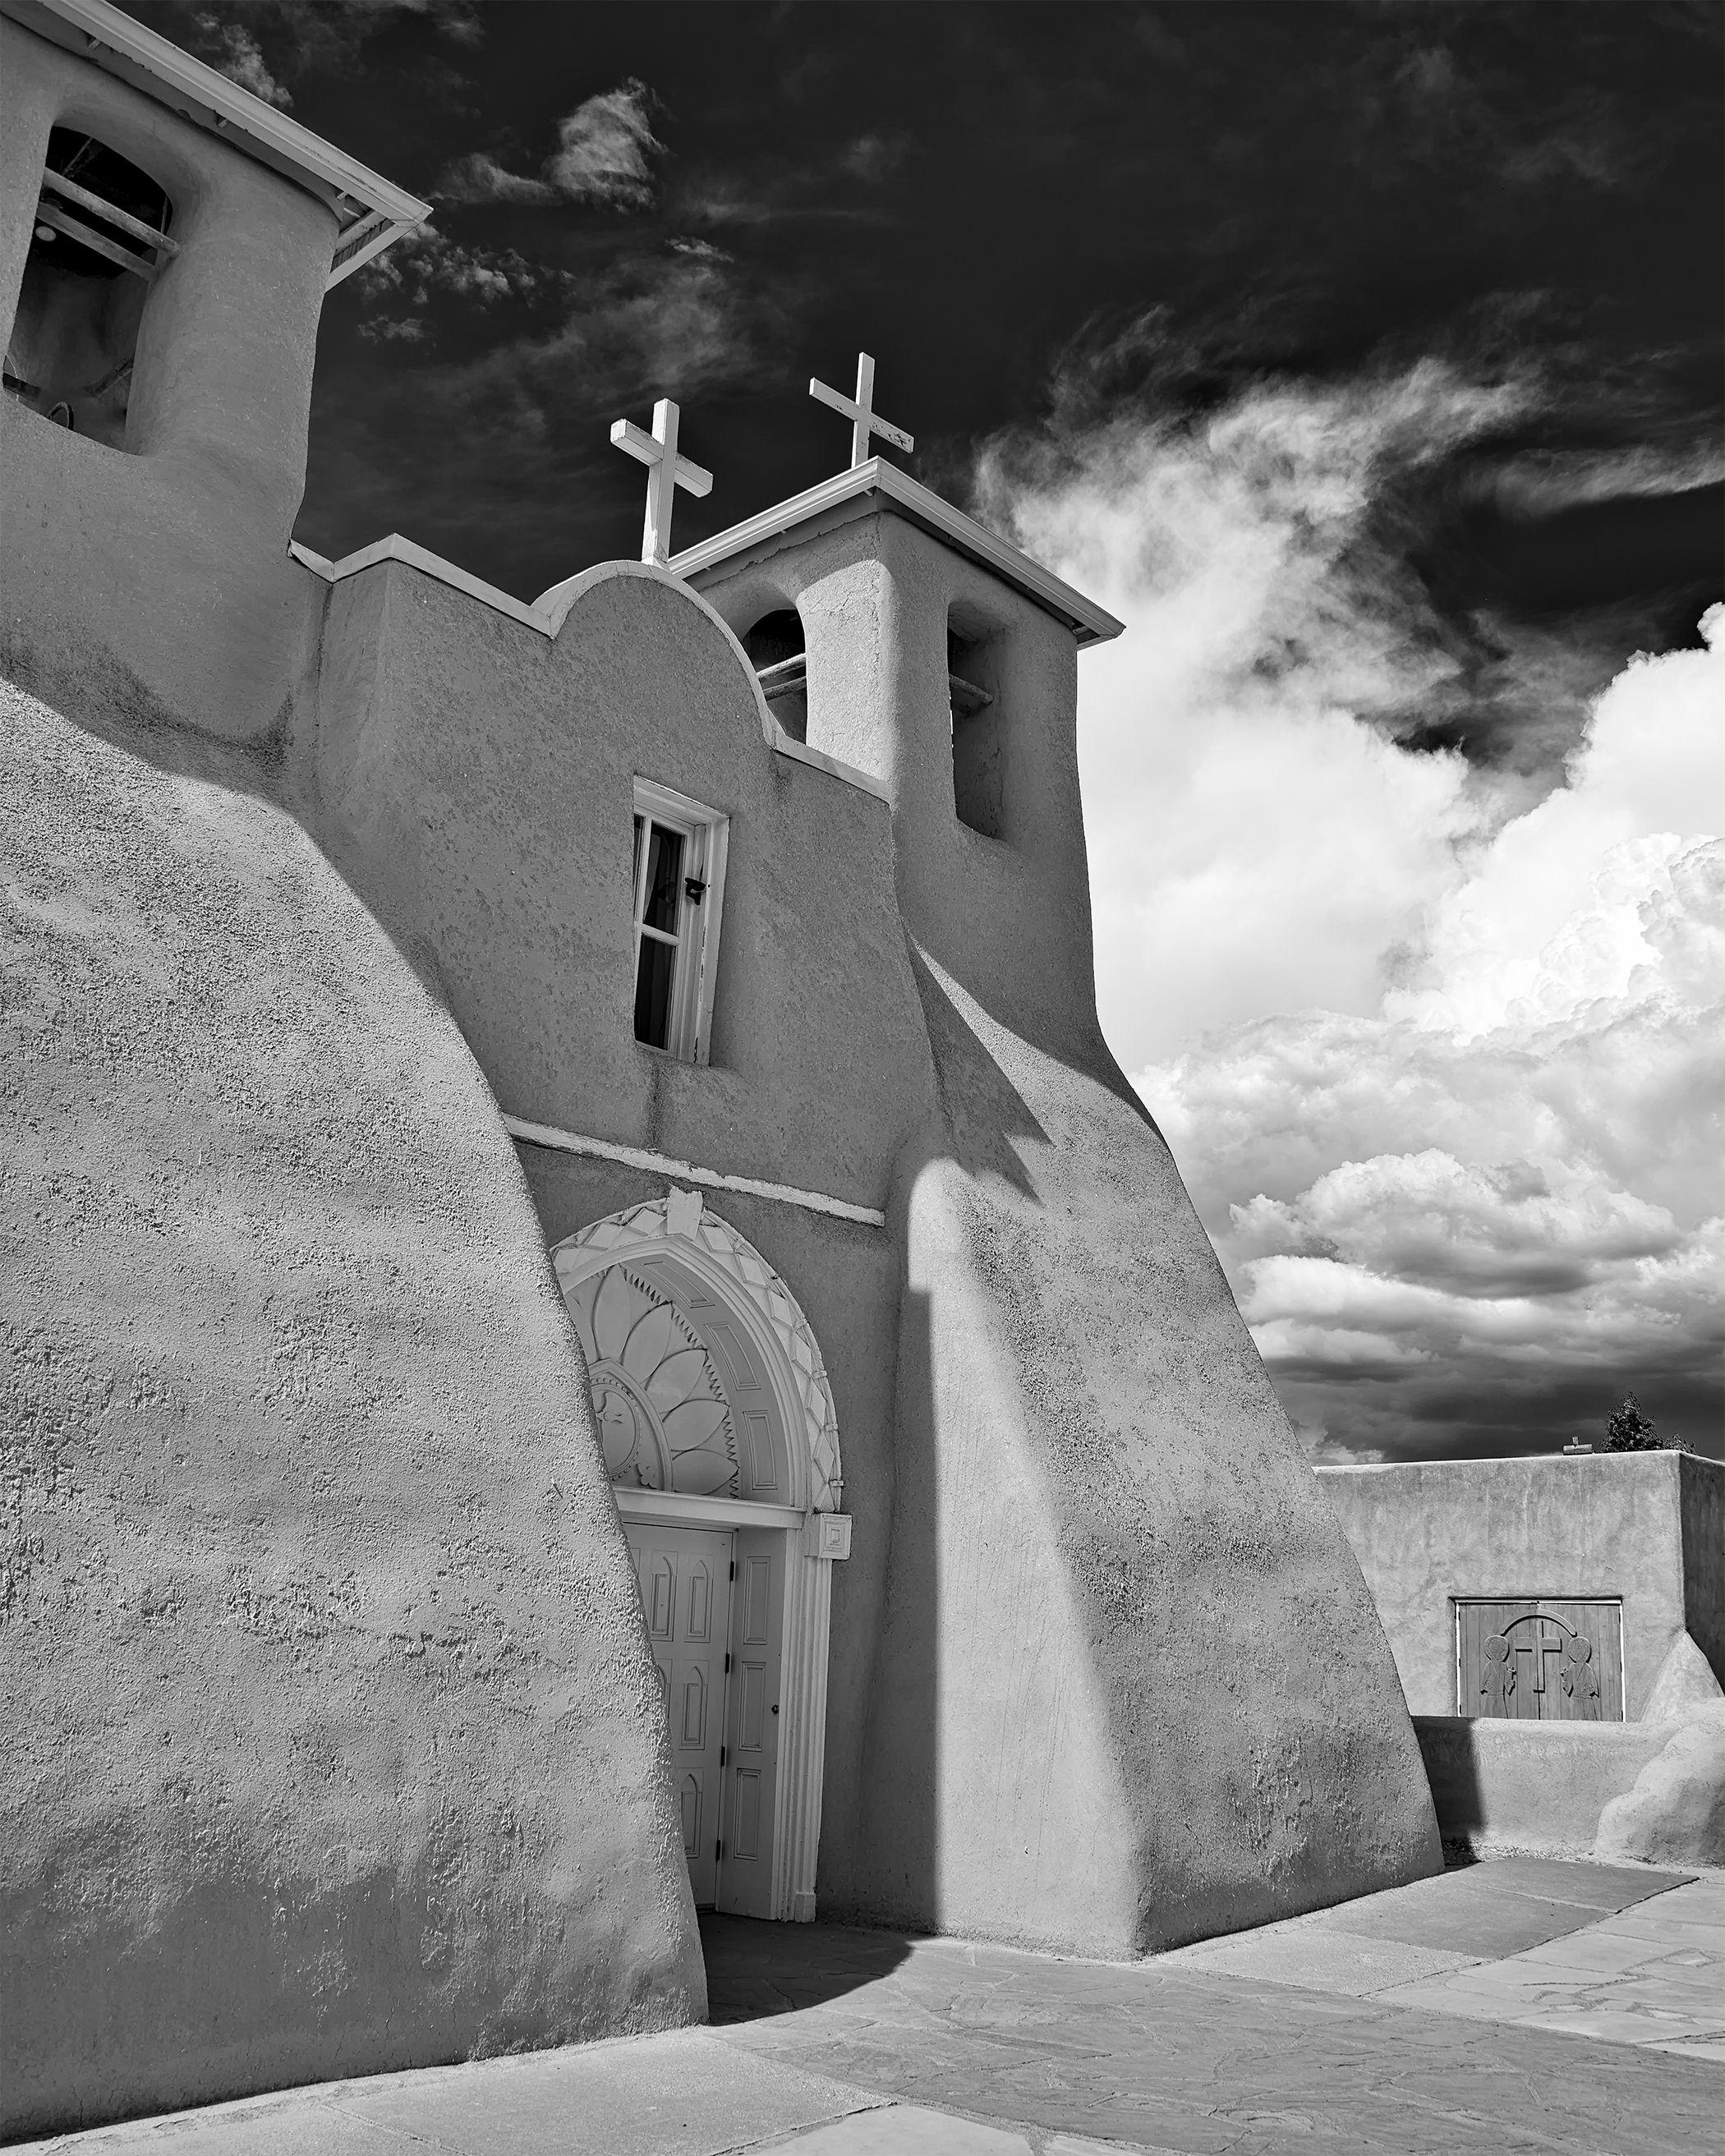 Daniel Ashe Black and White Photograph - Mission Church -ACRYLIC/METAL PRINT WALL ART, Photograph, C-Type